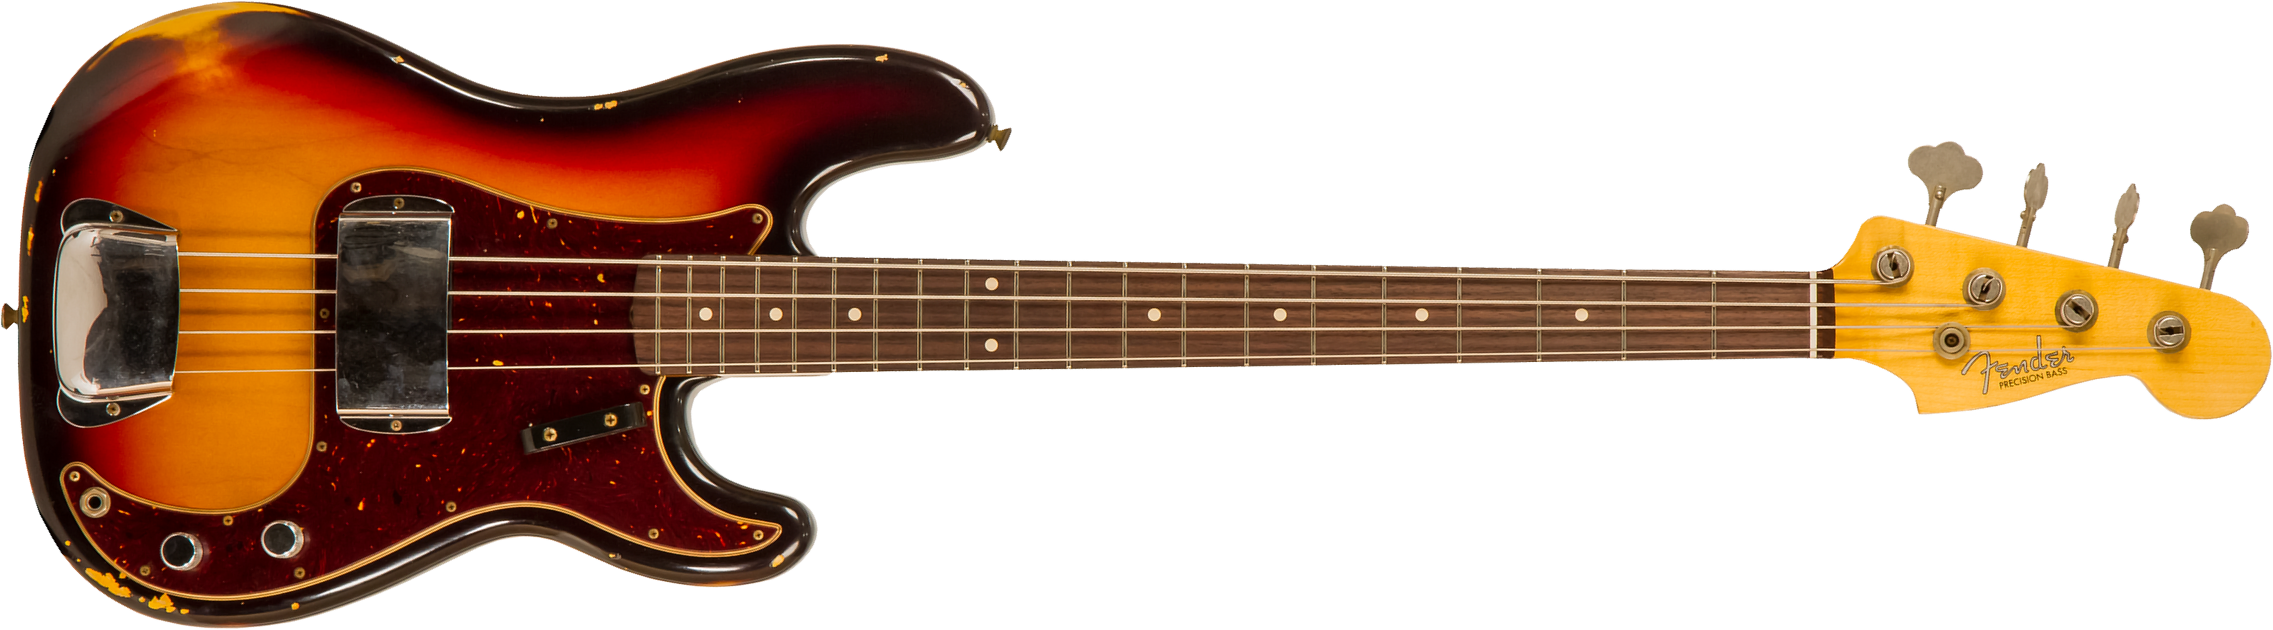 Fender Custom Shop Precision Bass 1961 Rw #cz556533 - Relic 3-color Sunburst - Solidbody E-bass - Main picture